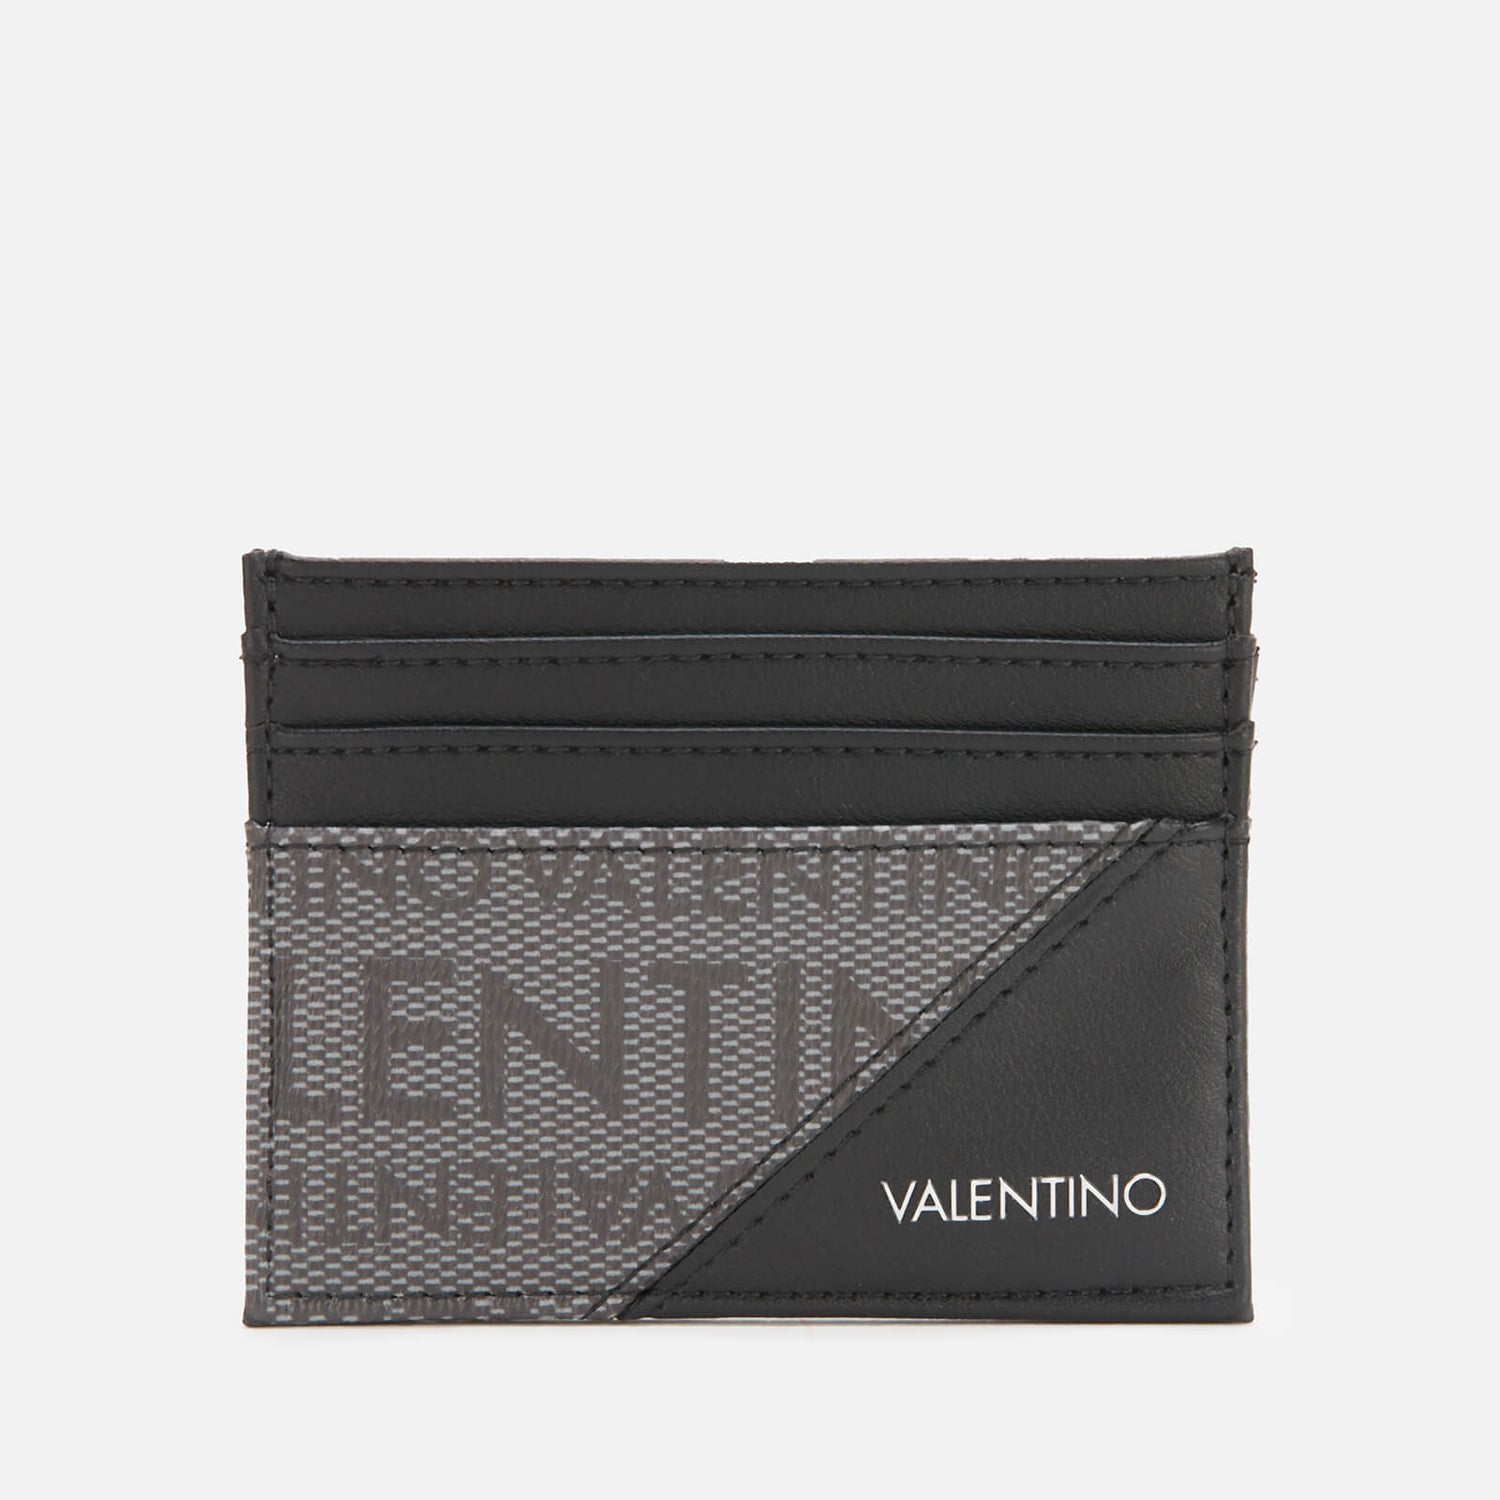 Valentino Men's Dry Credit Card Holder - Black Multi